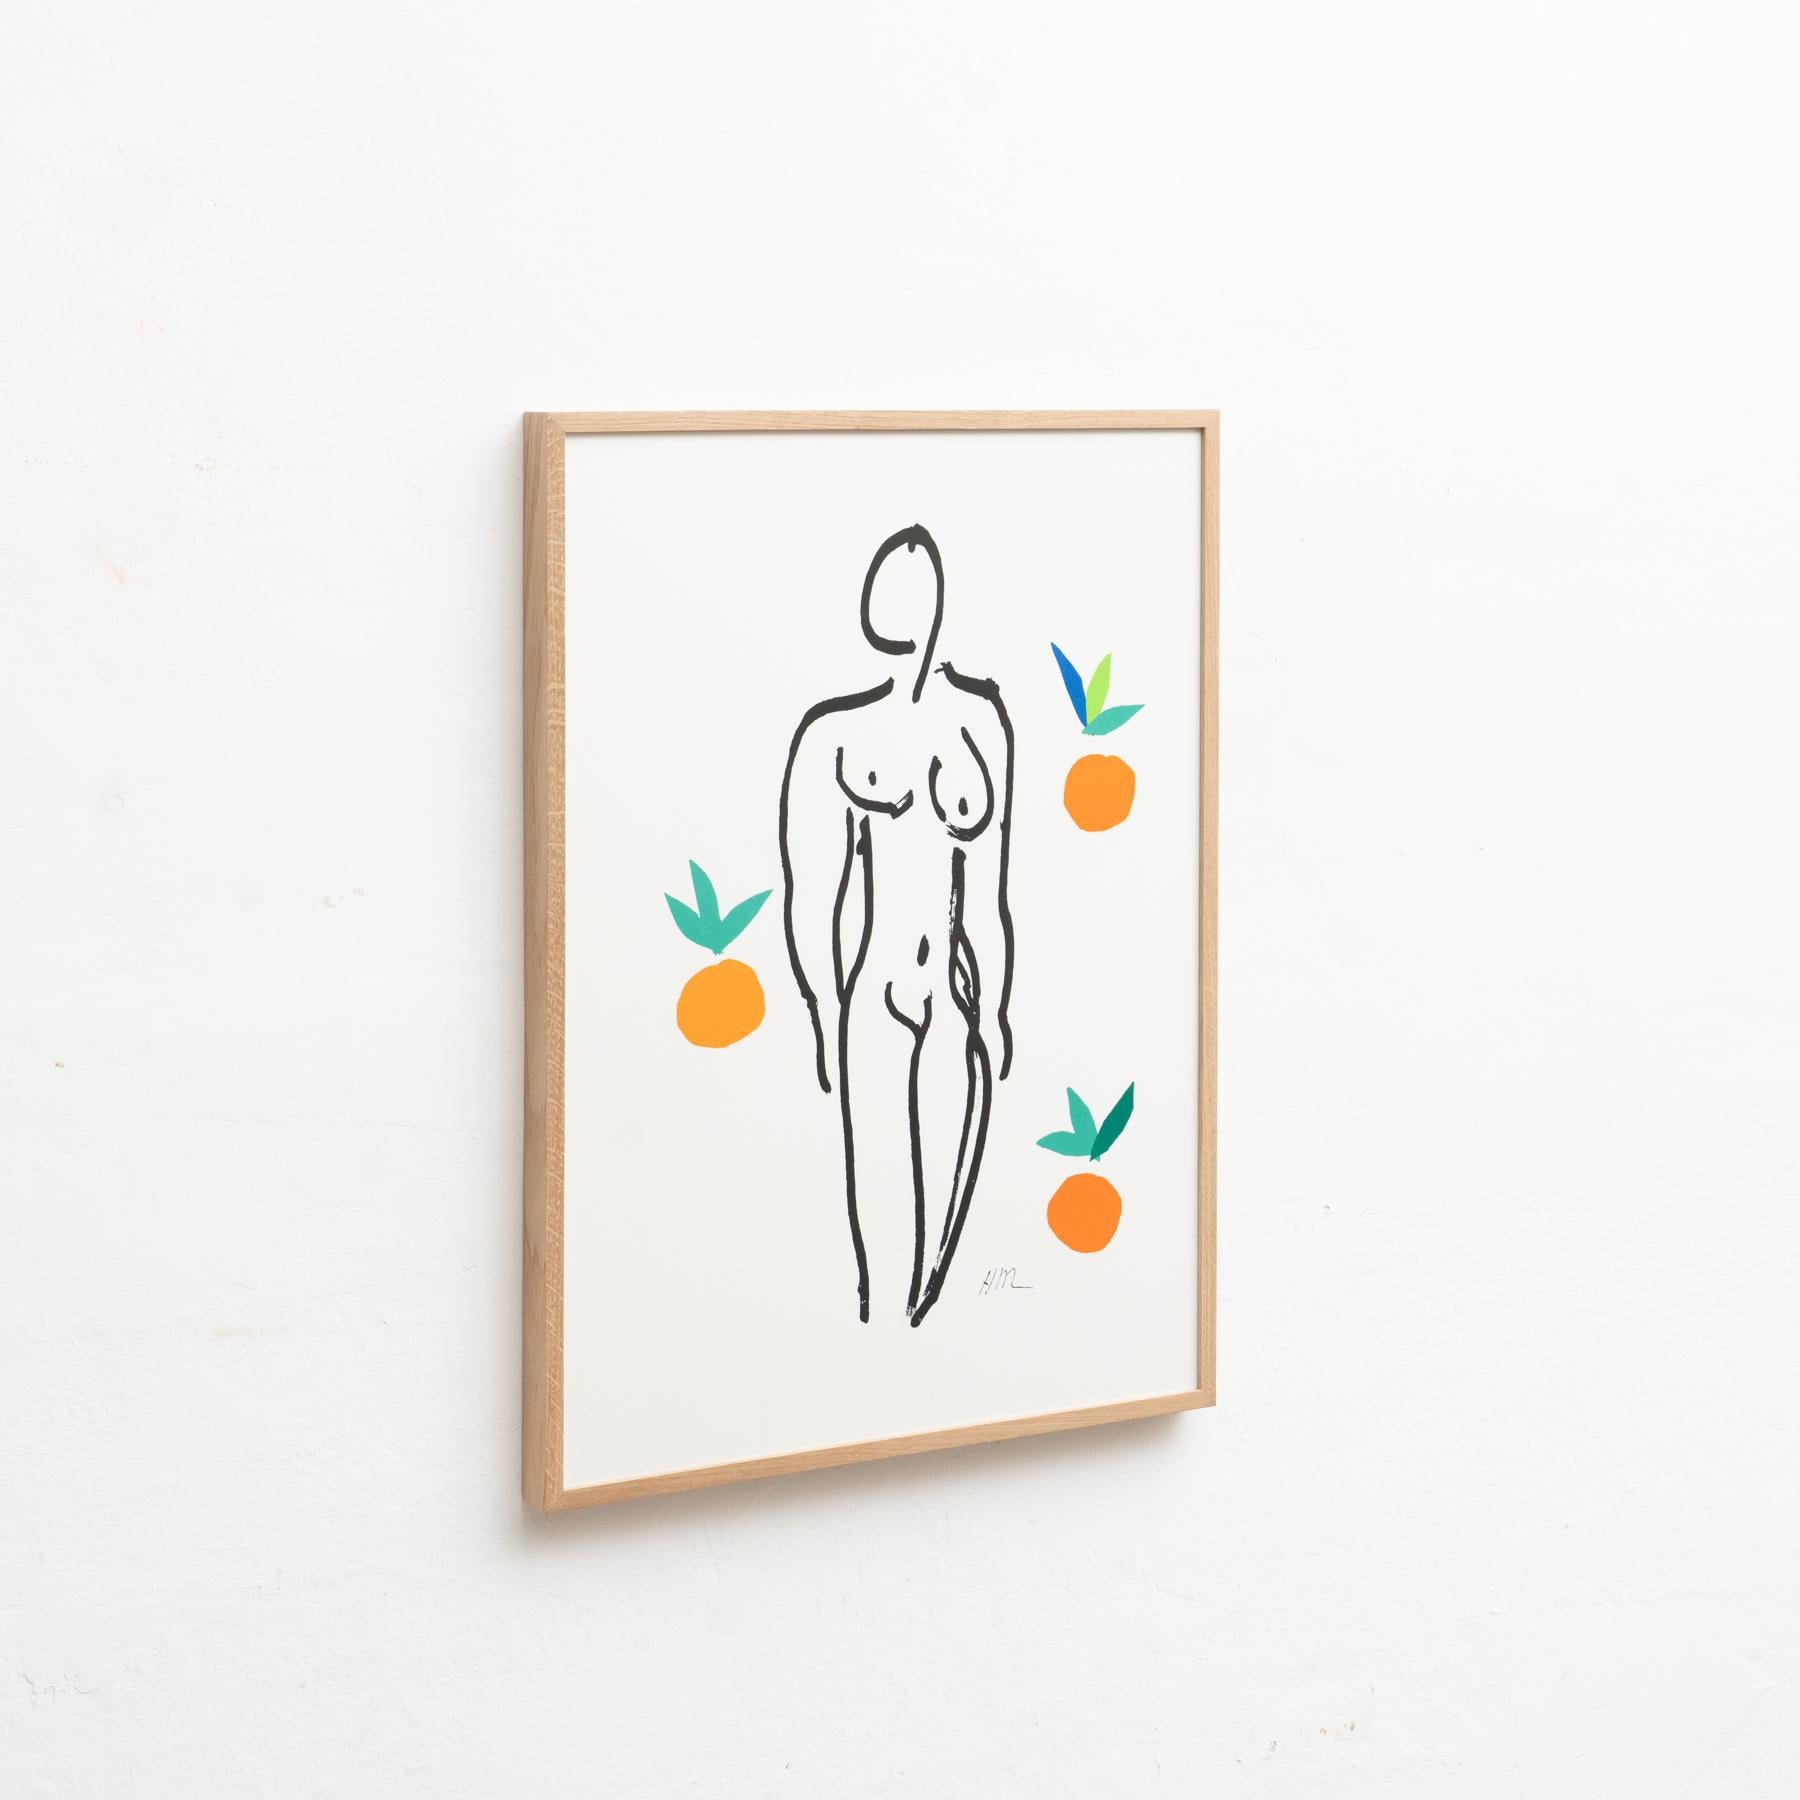 After Henri Matisse 'Nu Aux Orange' Lithograph, circa 2007 For Sale 2